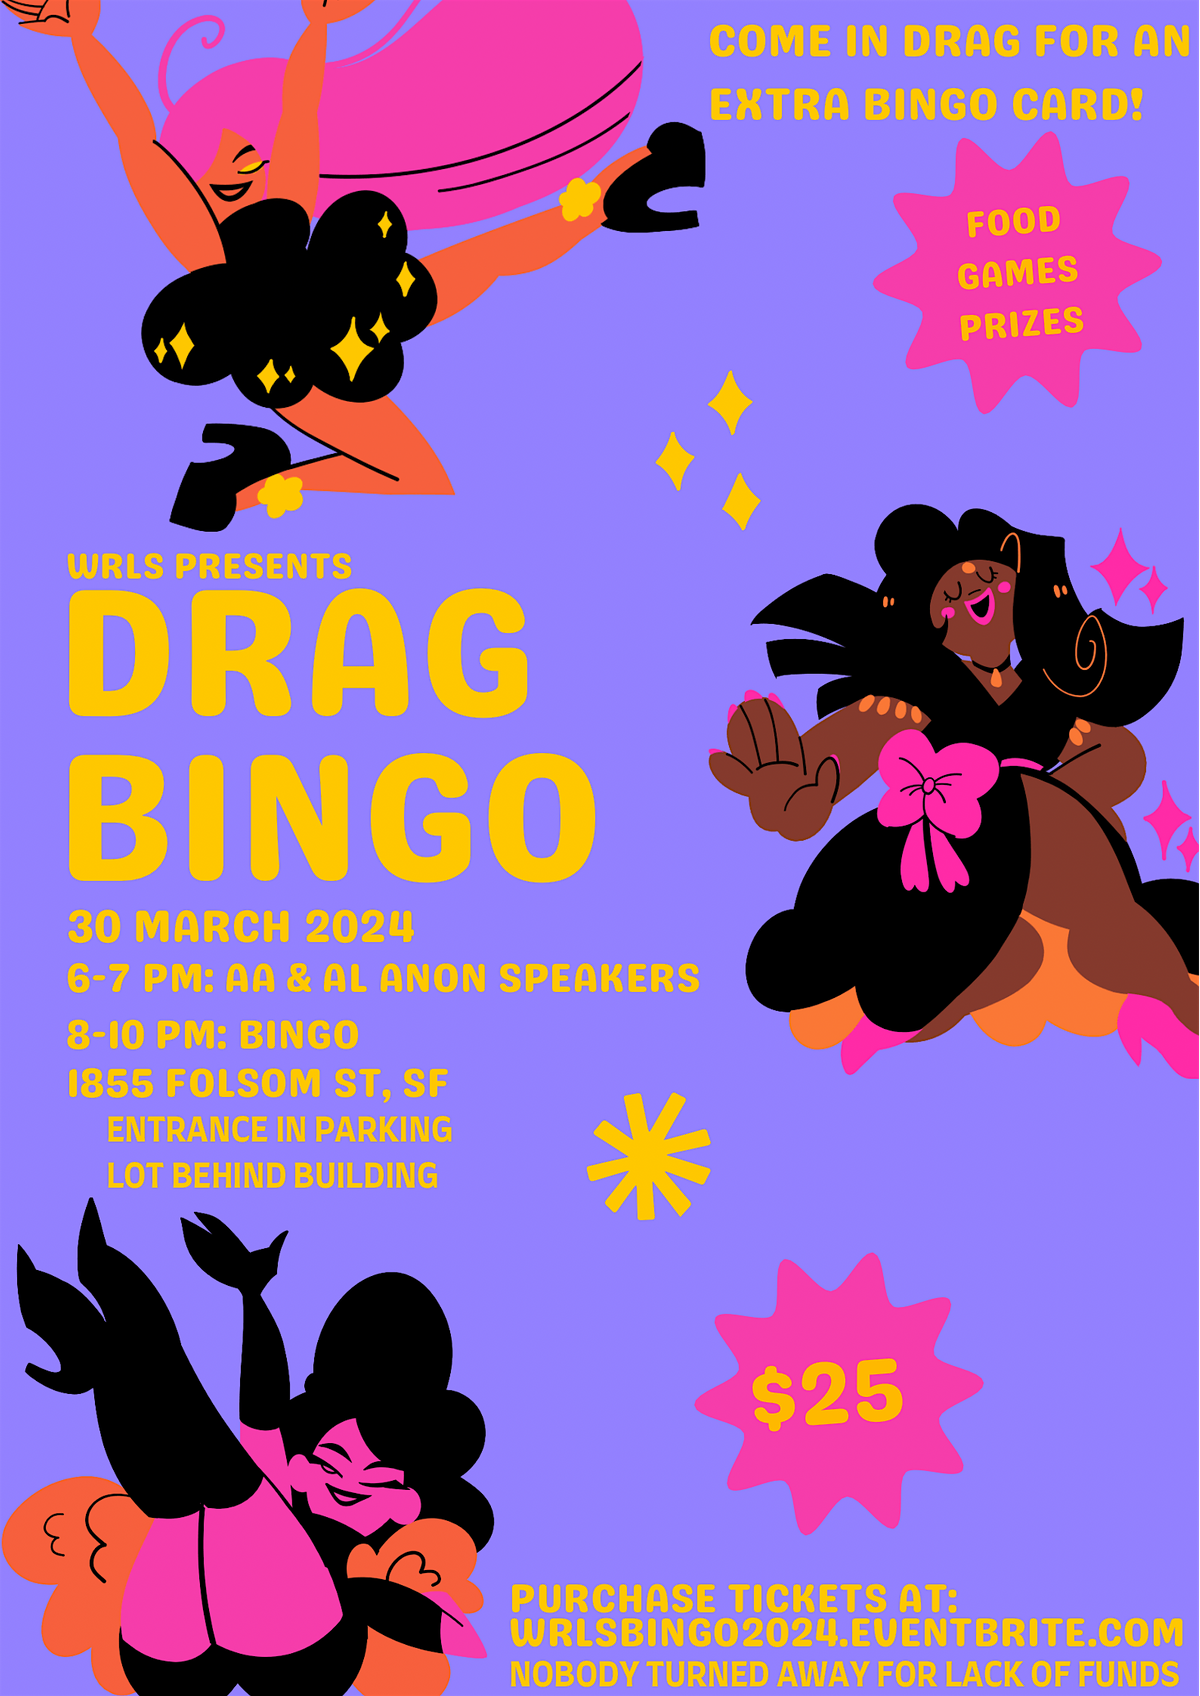 WRLS Presents: DRAG BINGO!